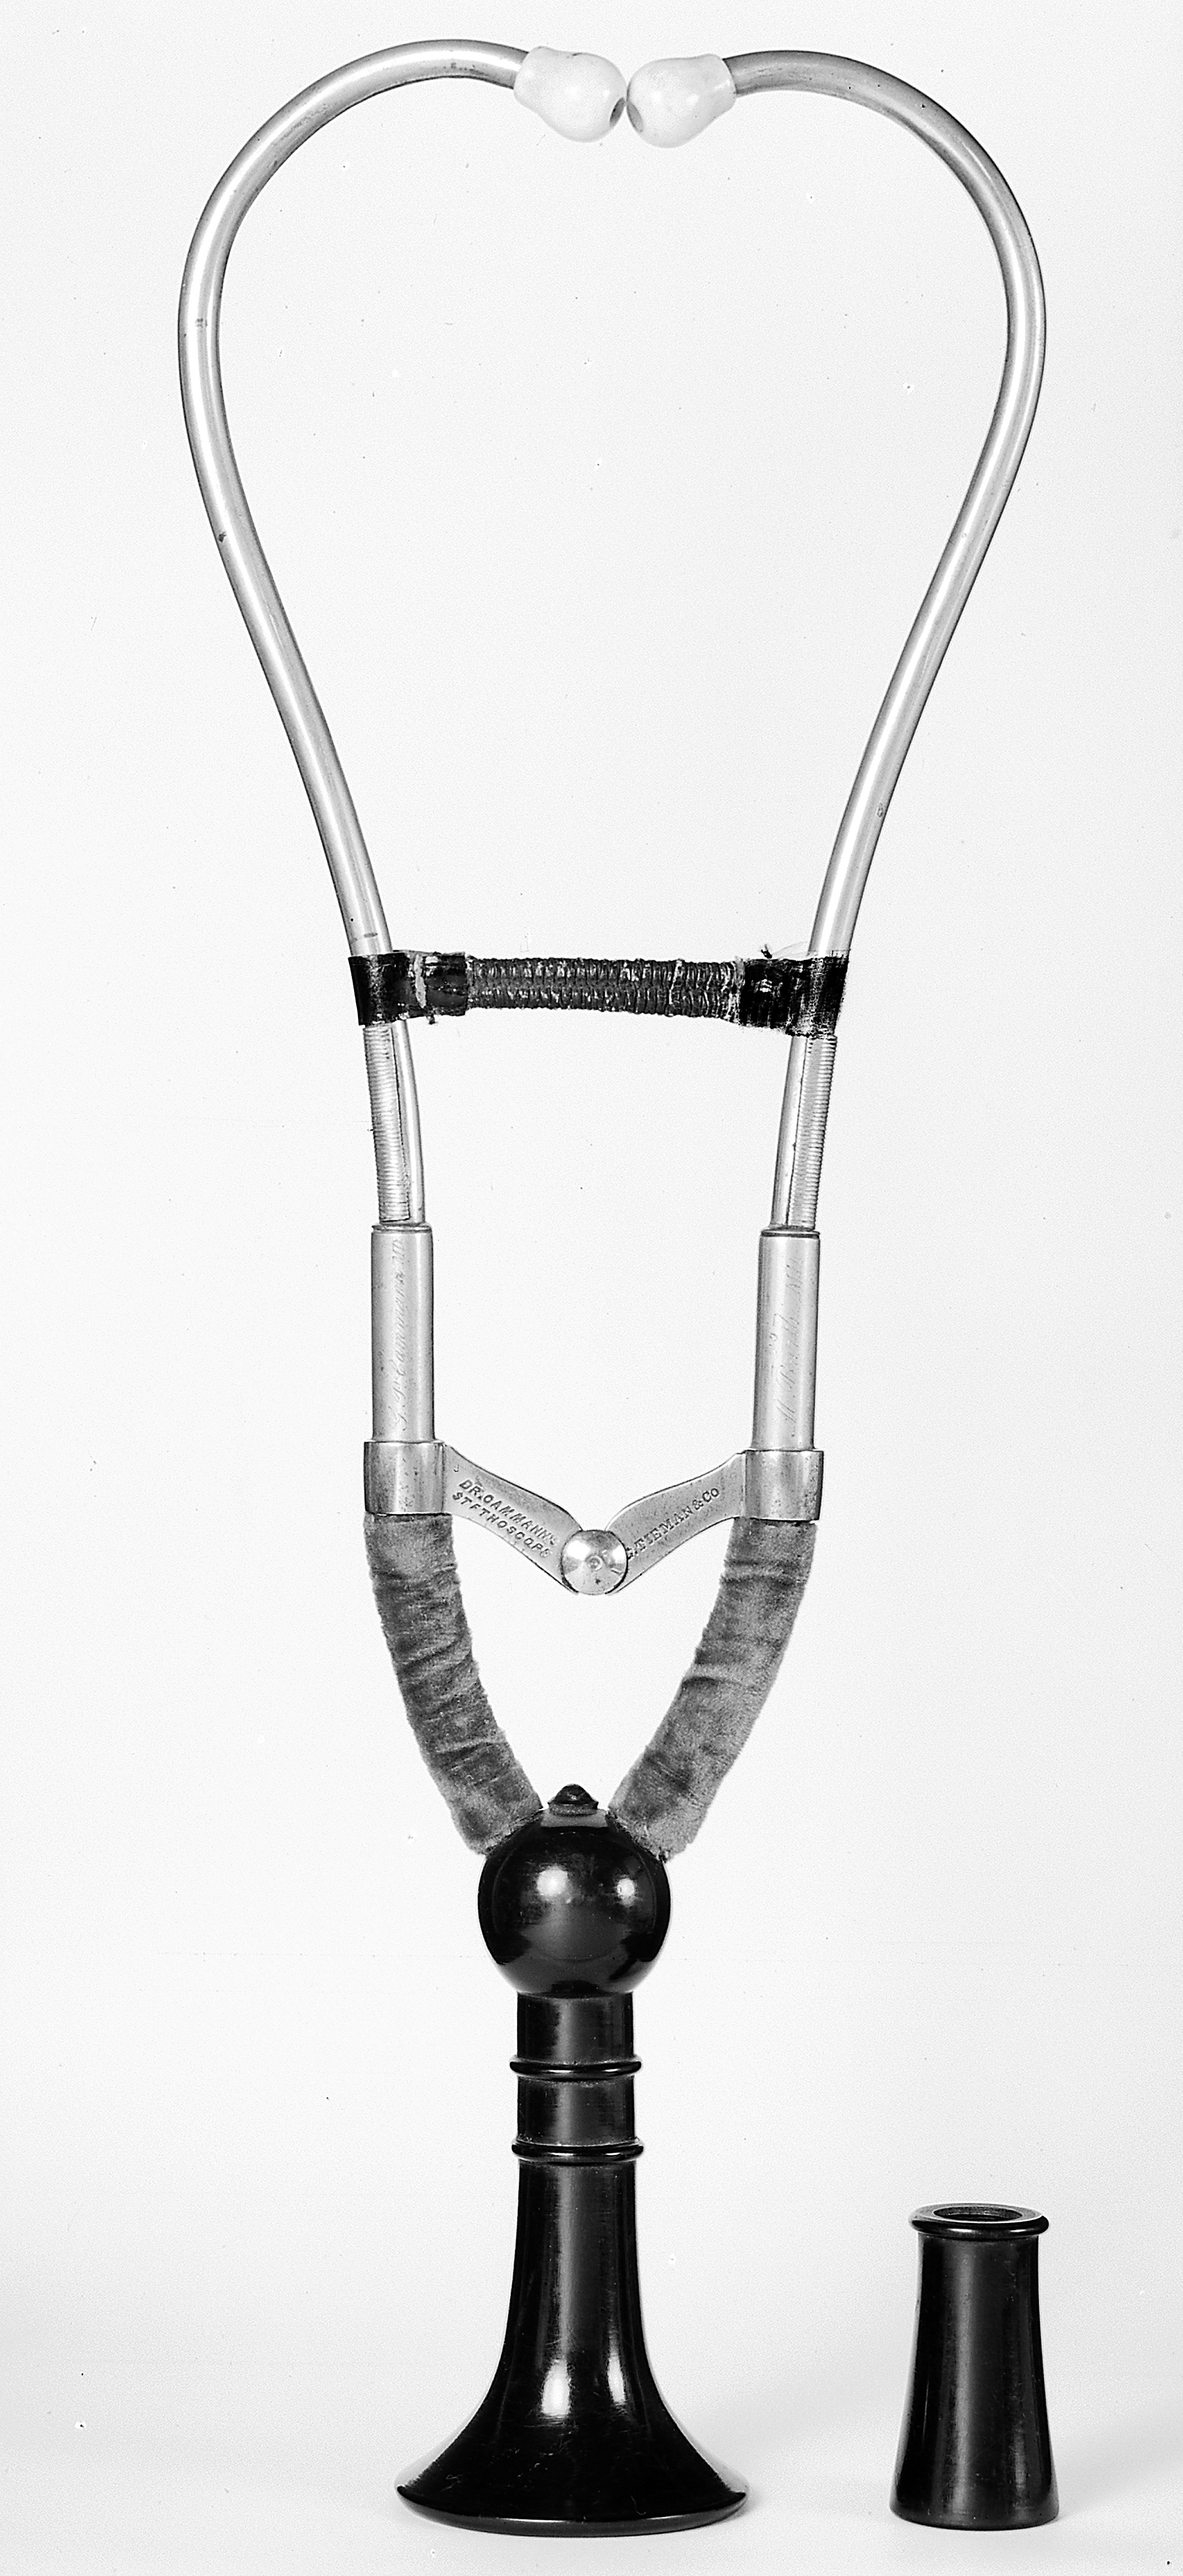 Binaural stethoscope designed by Camman, 19th C. Wellcome M0011176